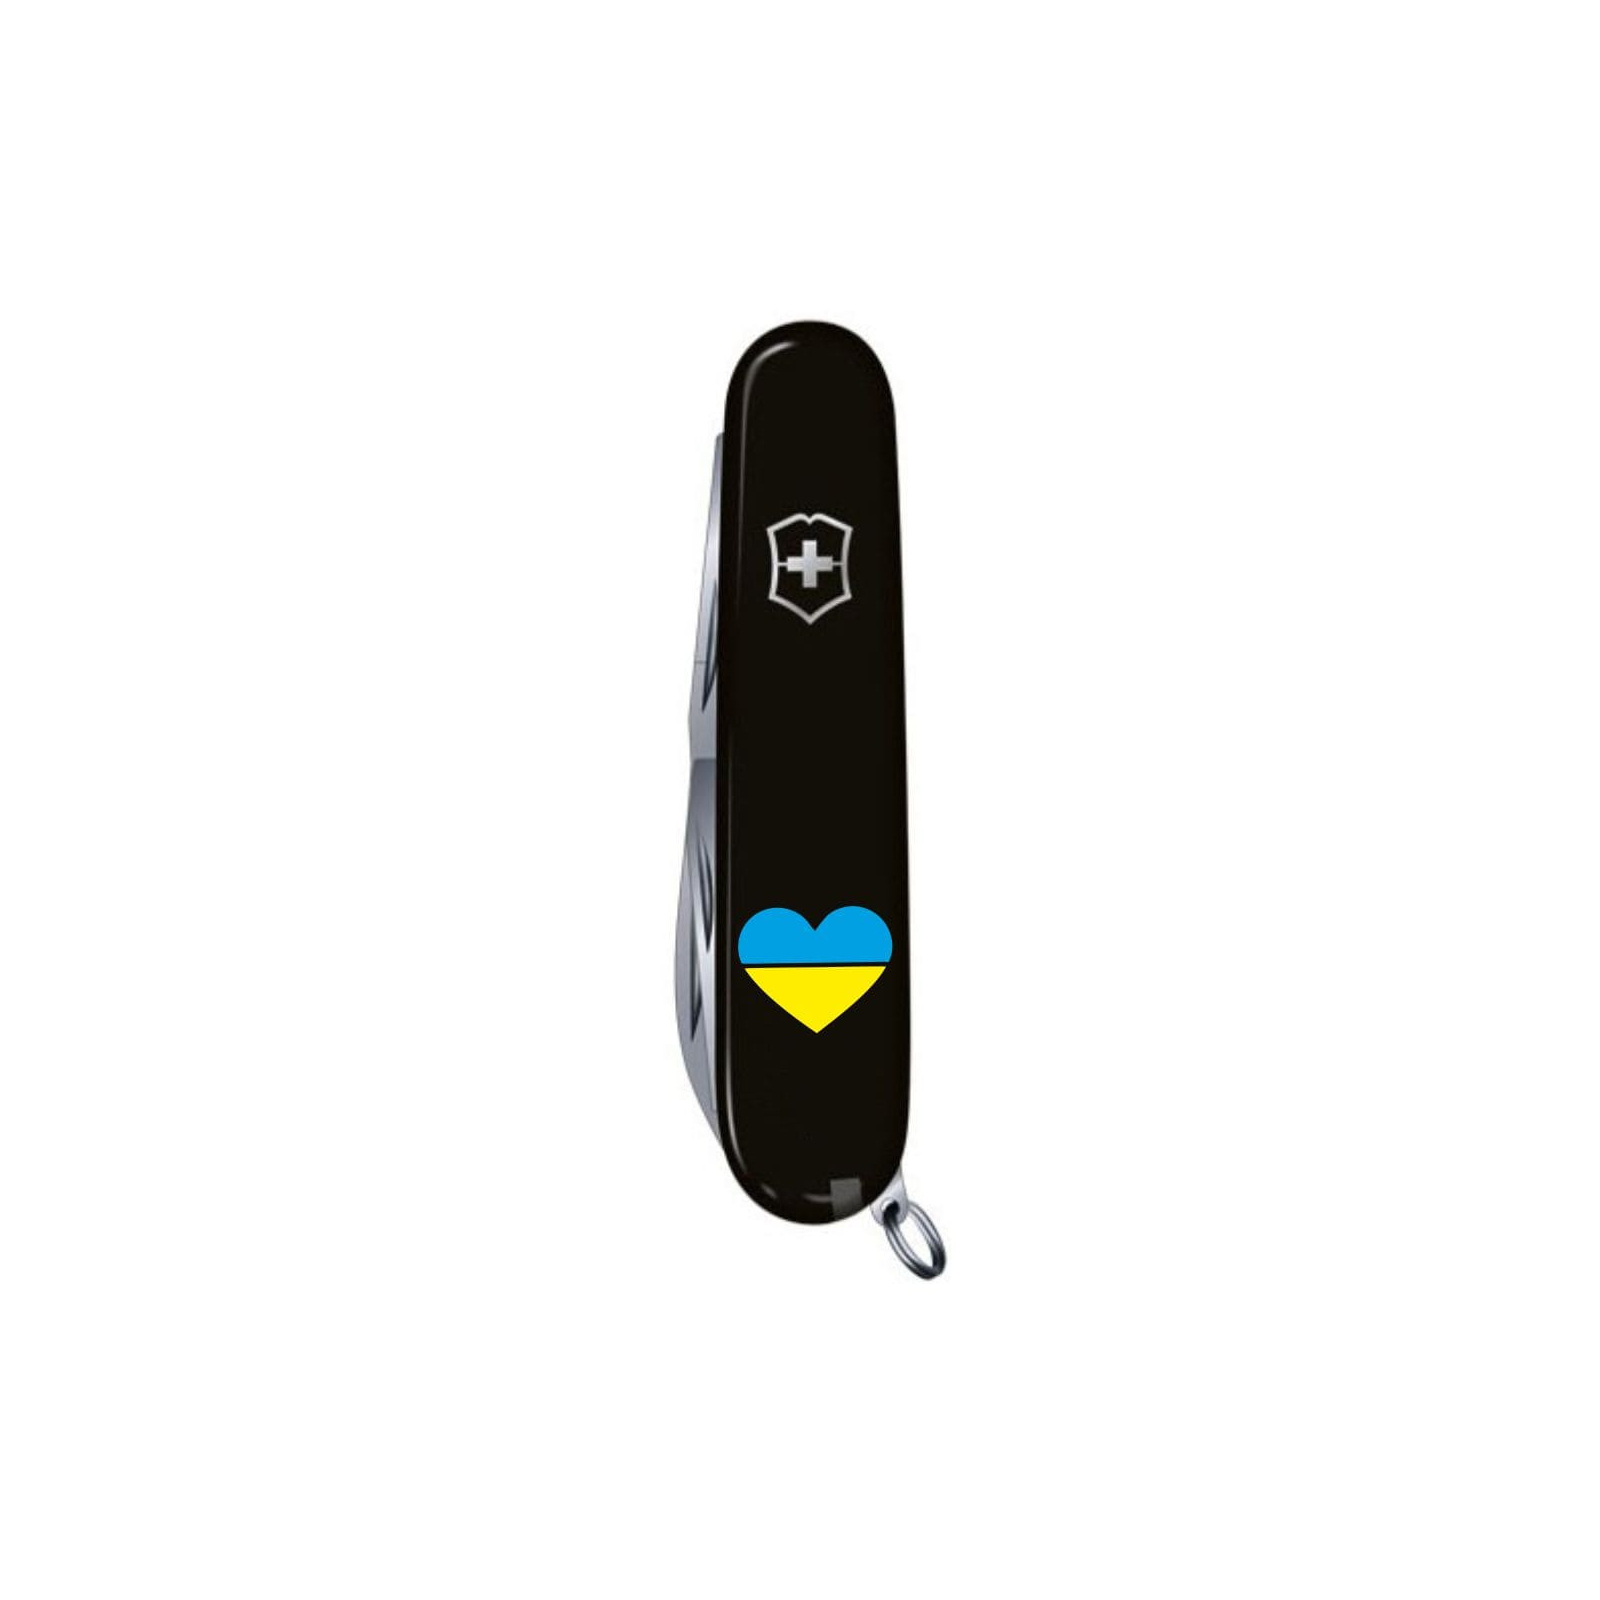 Нож Victorinox Huntsman Ukraine 91 мм Жовто-синій малюнок (1.3713.7_T3100p) изображение 5